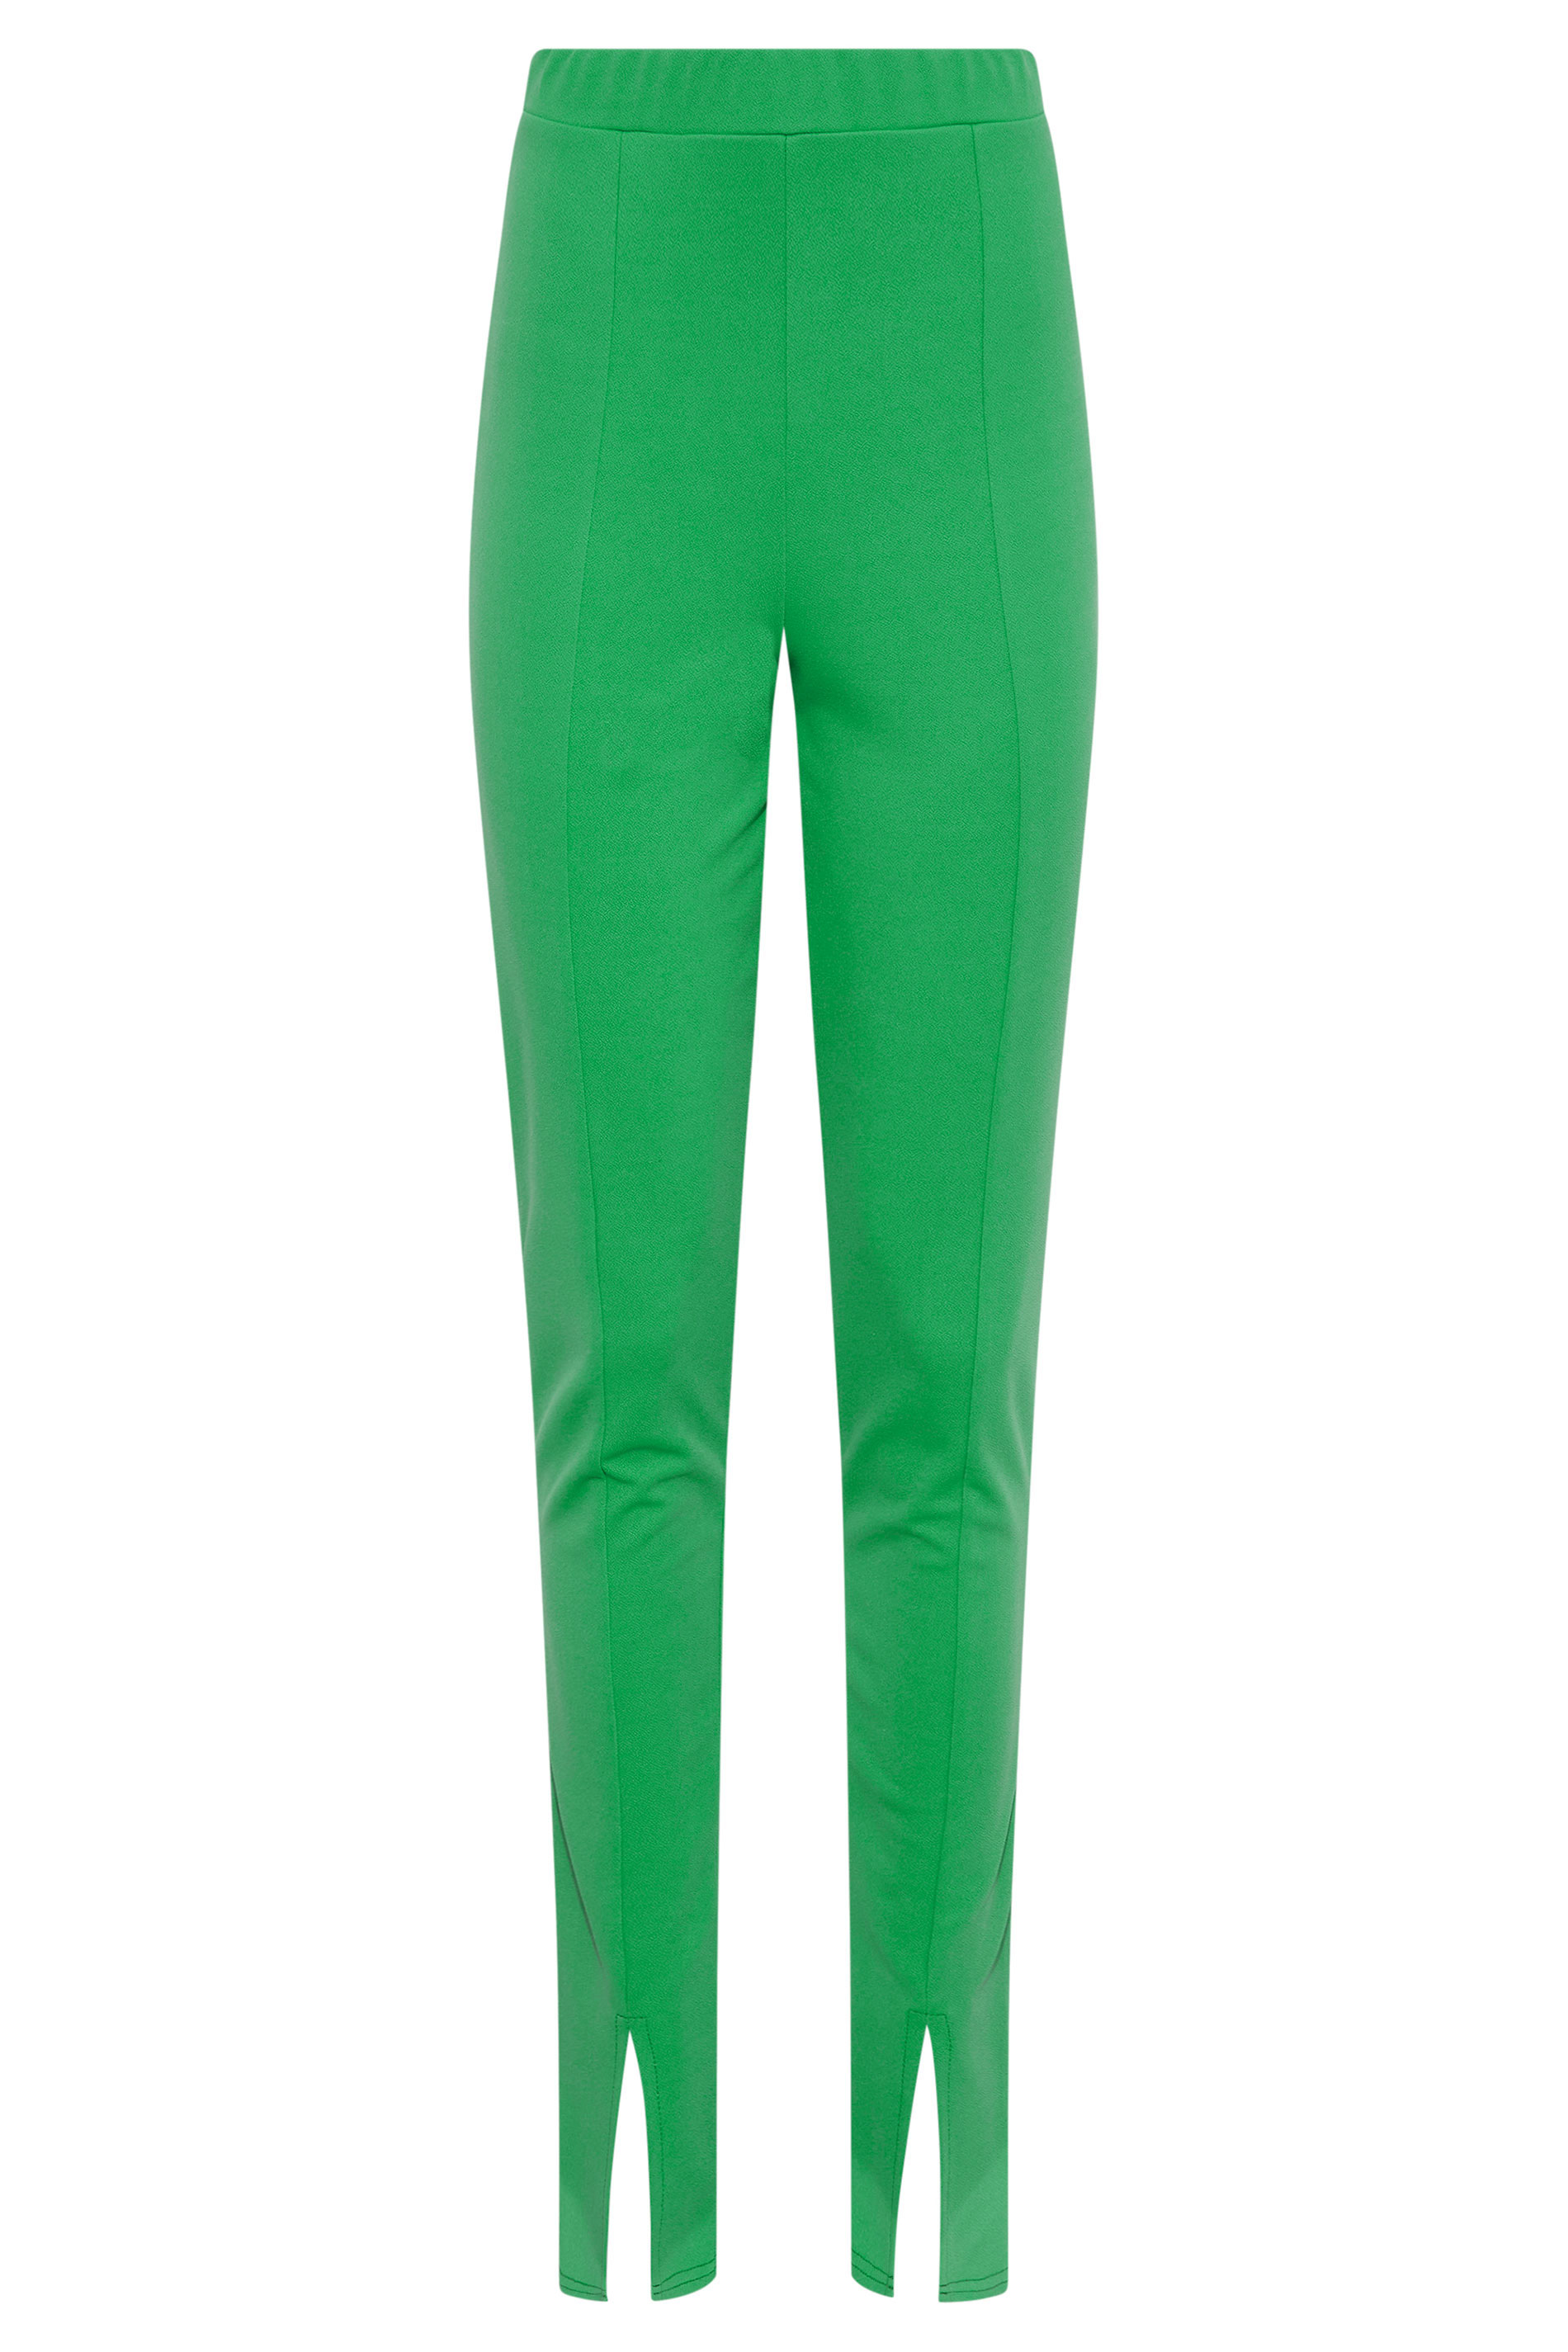 LTS Tall Women's Bright Green Split Front Slim Trousers | Long Tall Sally